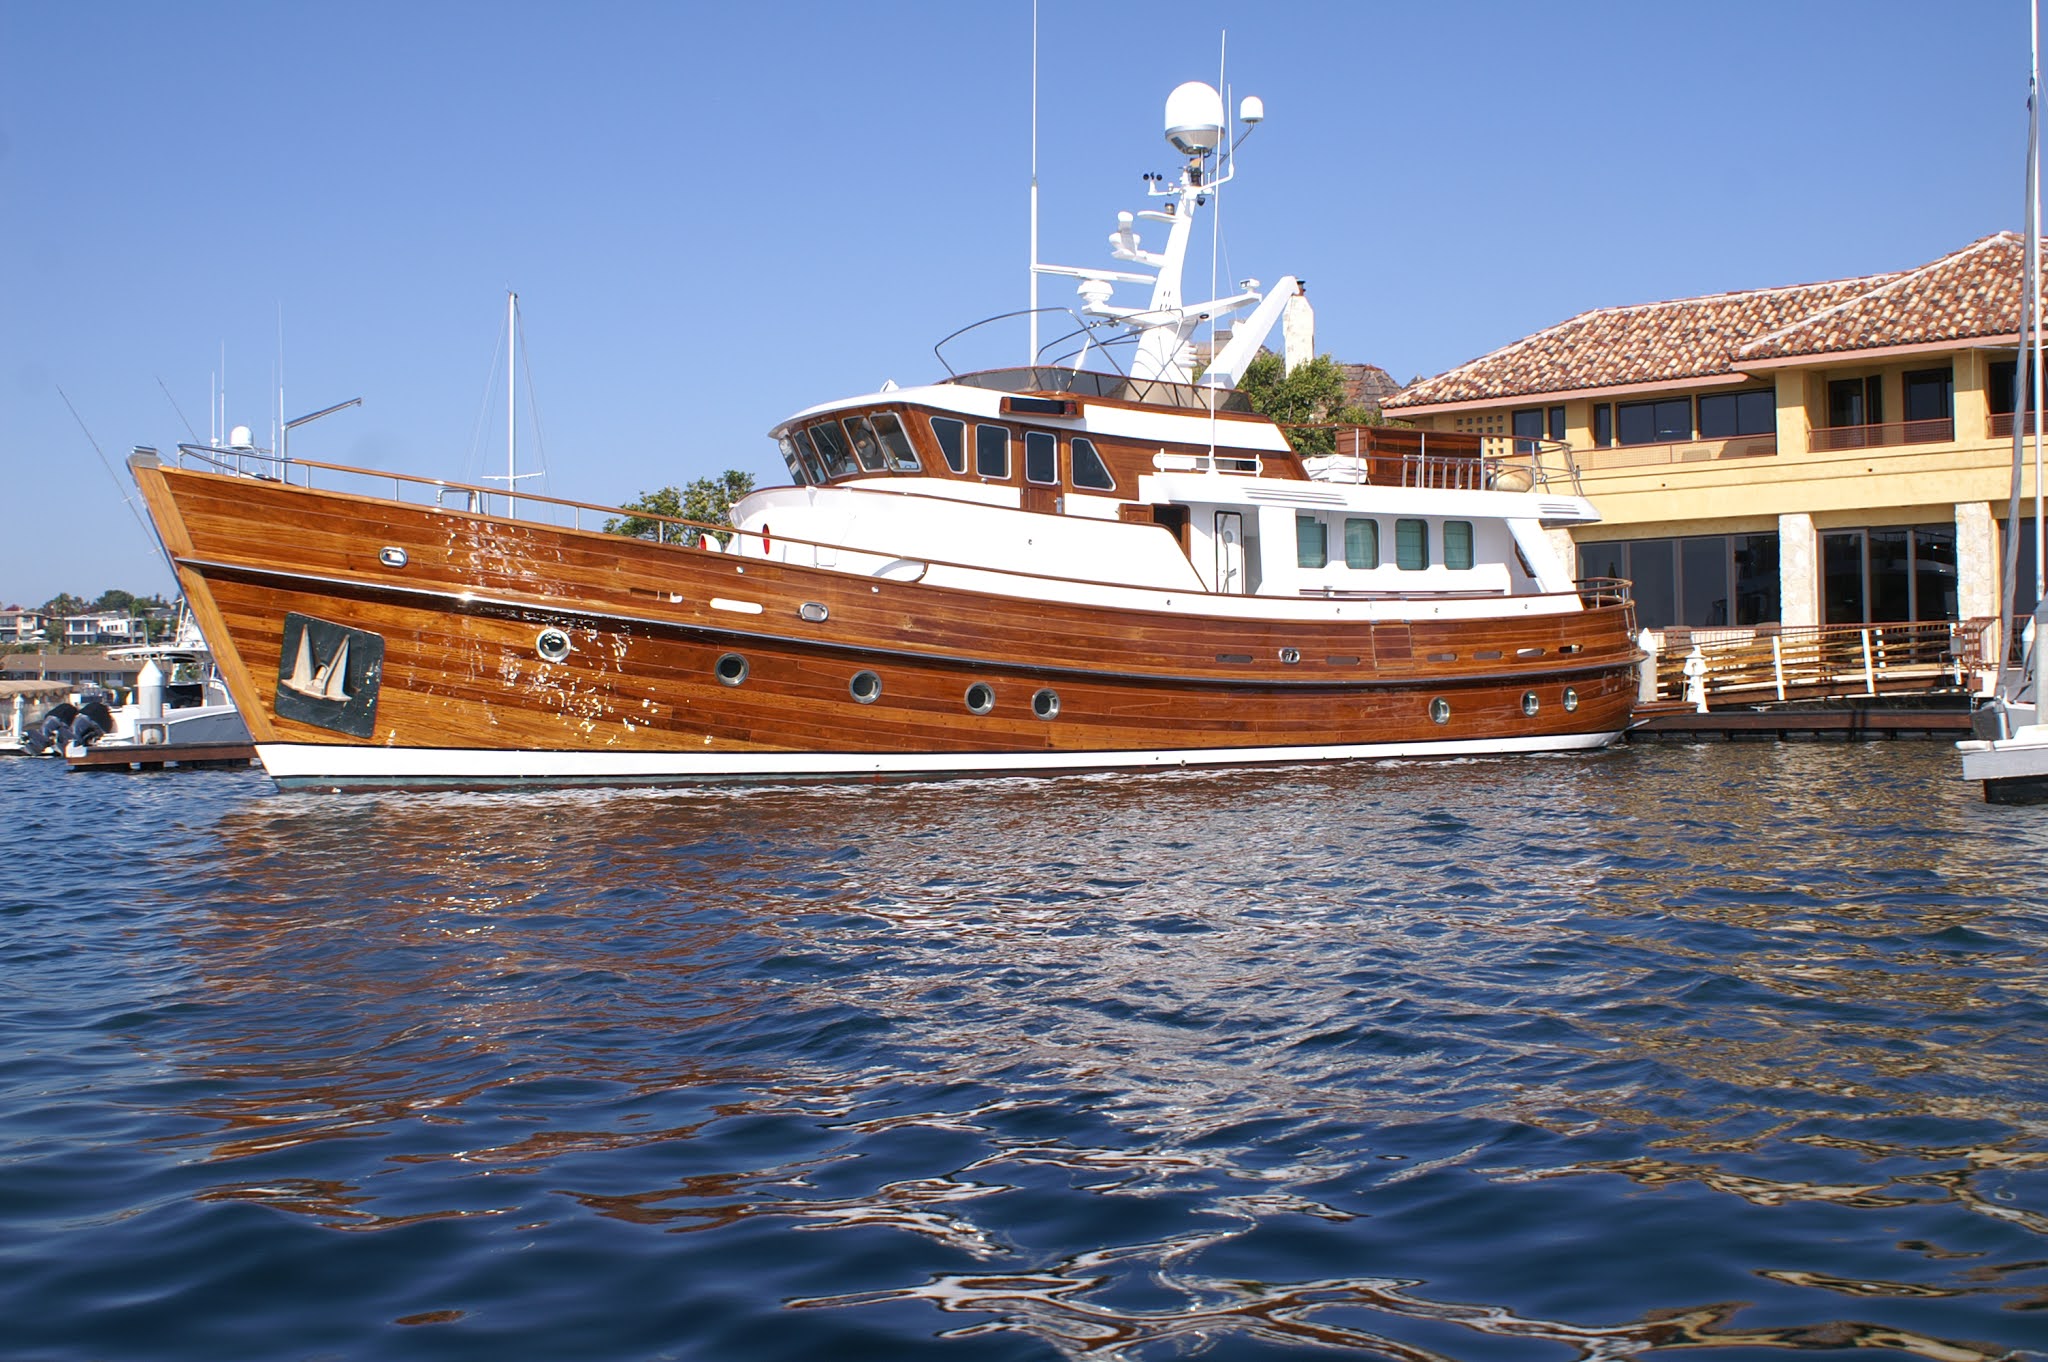 LEN BOSE YACHT SALES: 2020 Newport Beaches 20 Most Interesting Yachts ...